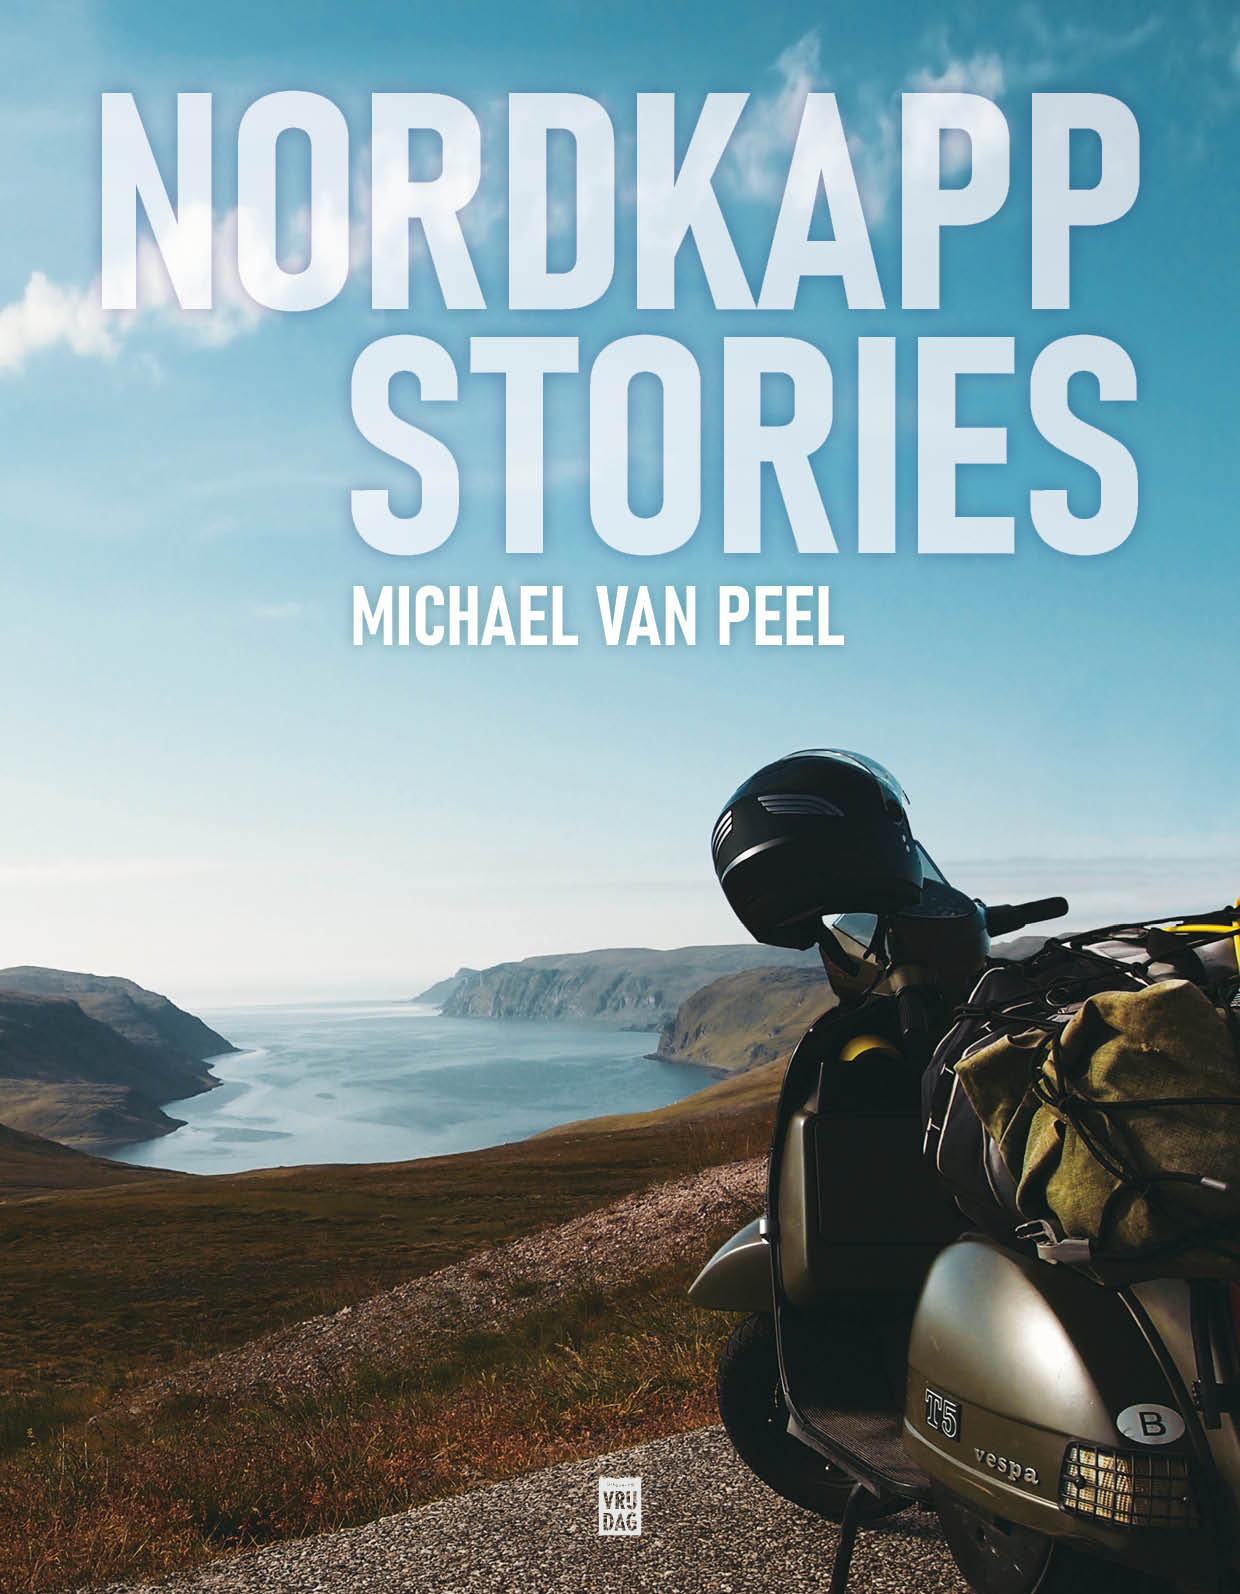 Nordkapp stories